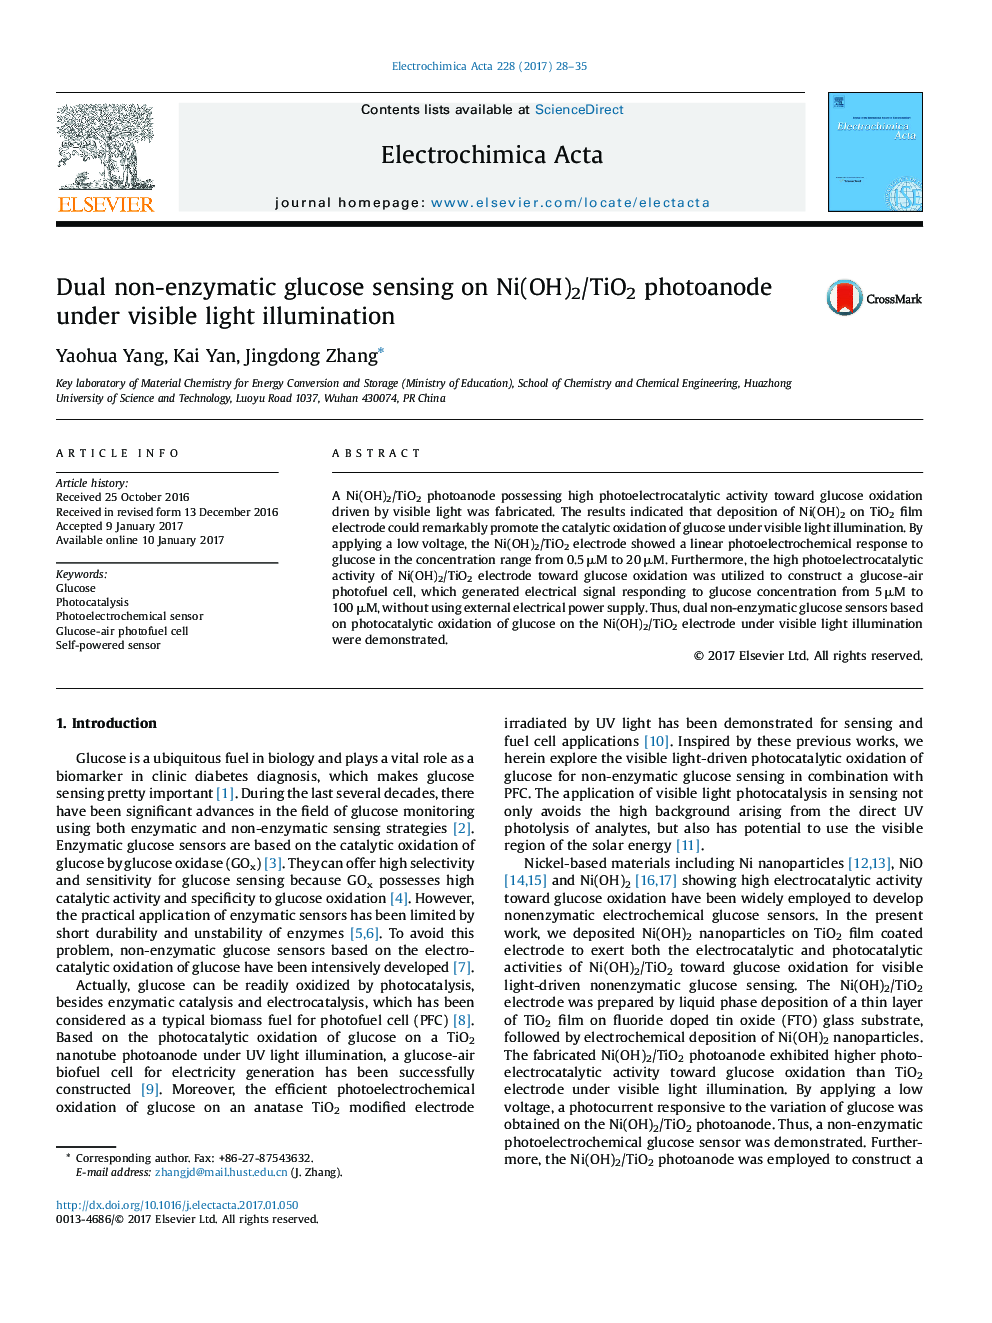 Dual non-enzymatic glucose sensing on Ni(OH)2/TiO2 photoanode under visible light illumination